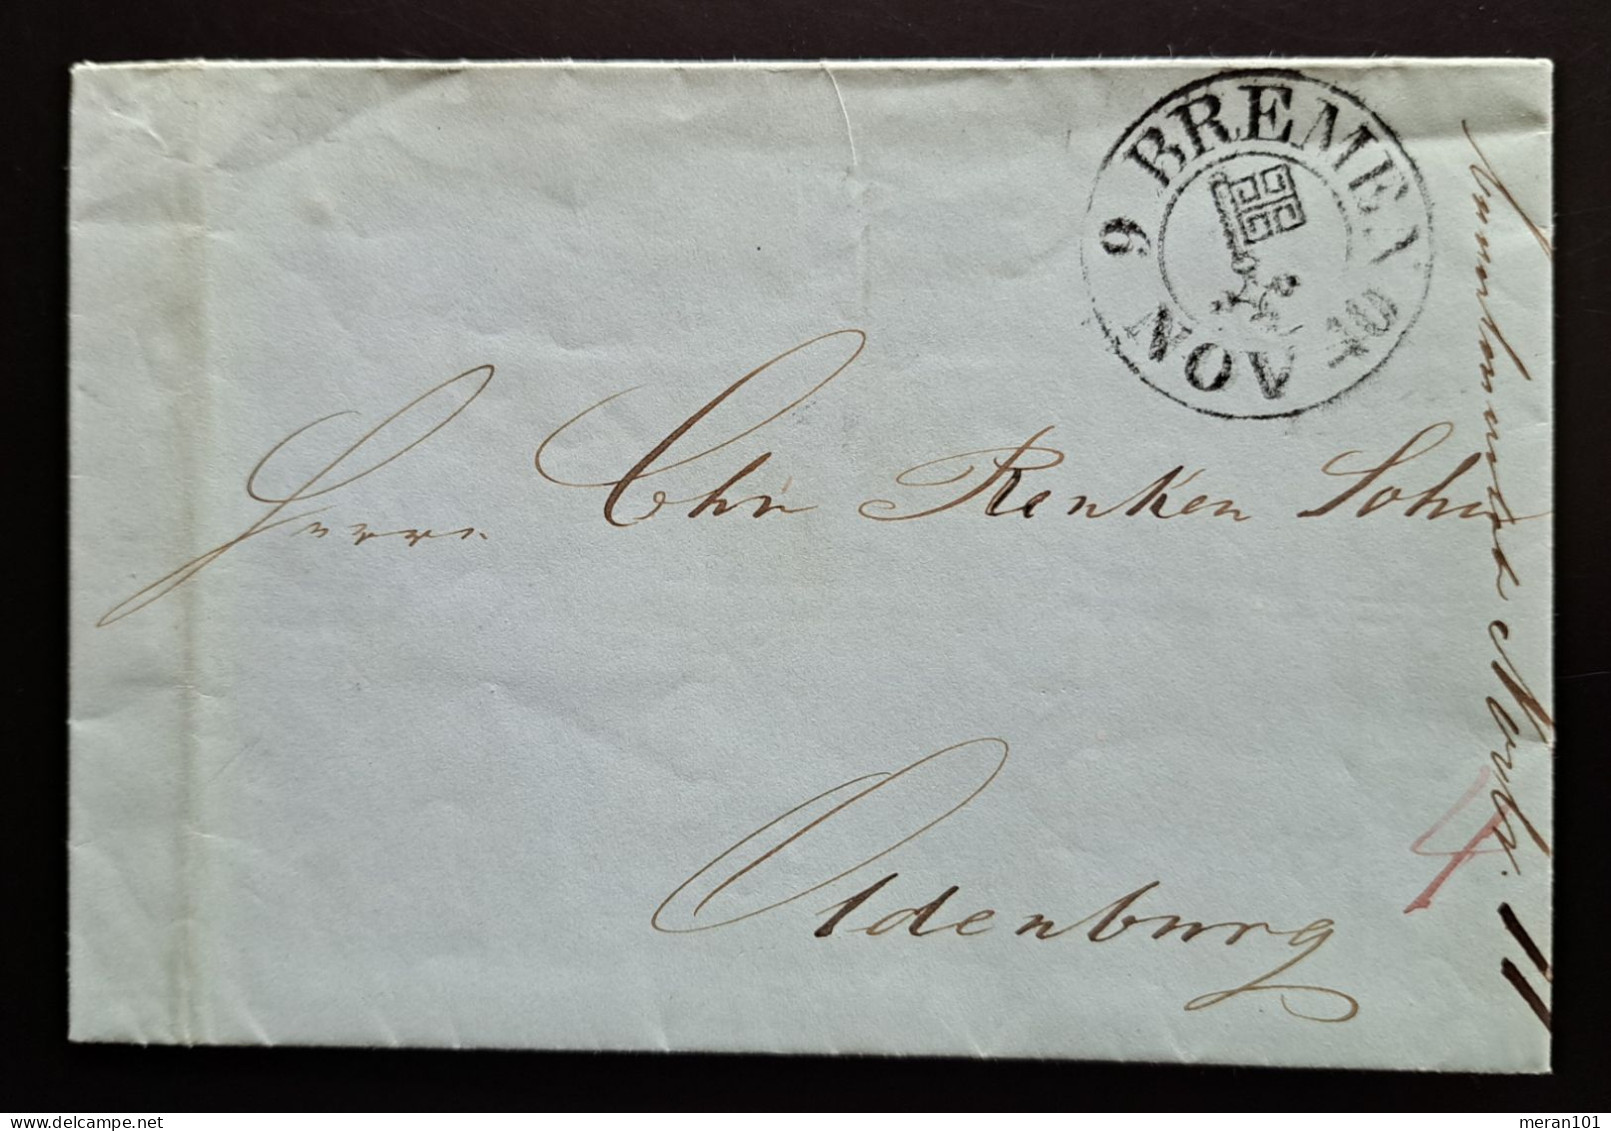 Bermen 1840, Brief Mit Inhalt BREMEN 9. NOV. 40, Feuser 431-24 - Brême